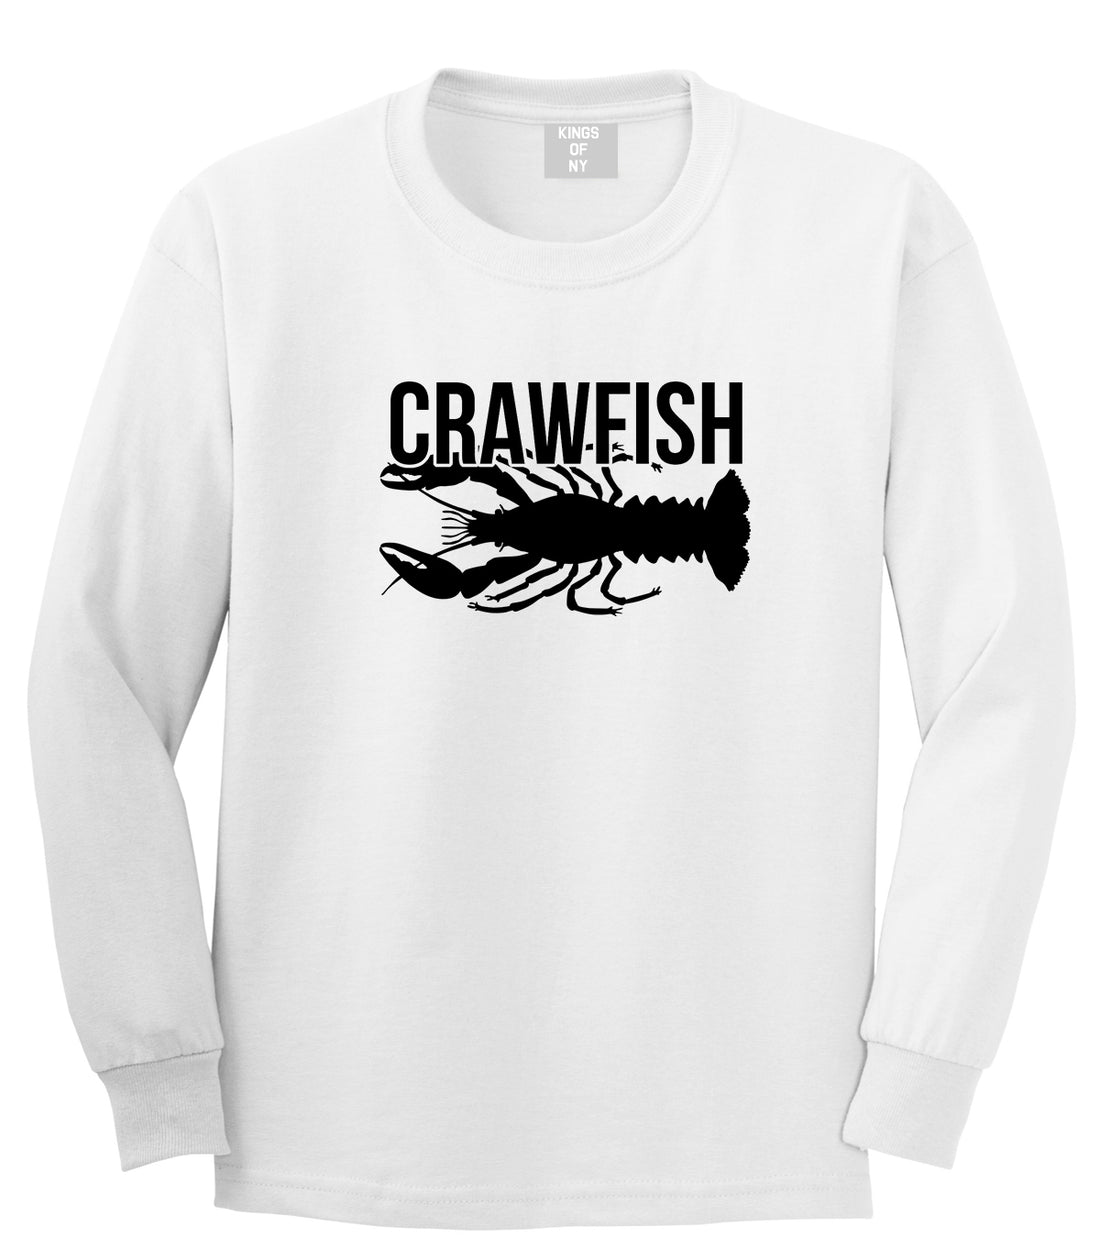 Crawfish White Long Sleeve T-Shirt by Kings Of NY